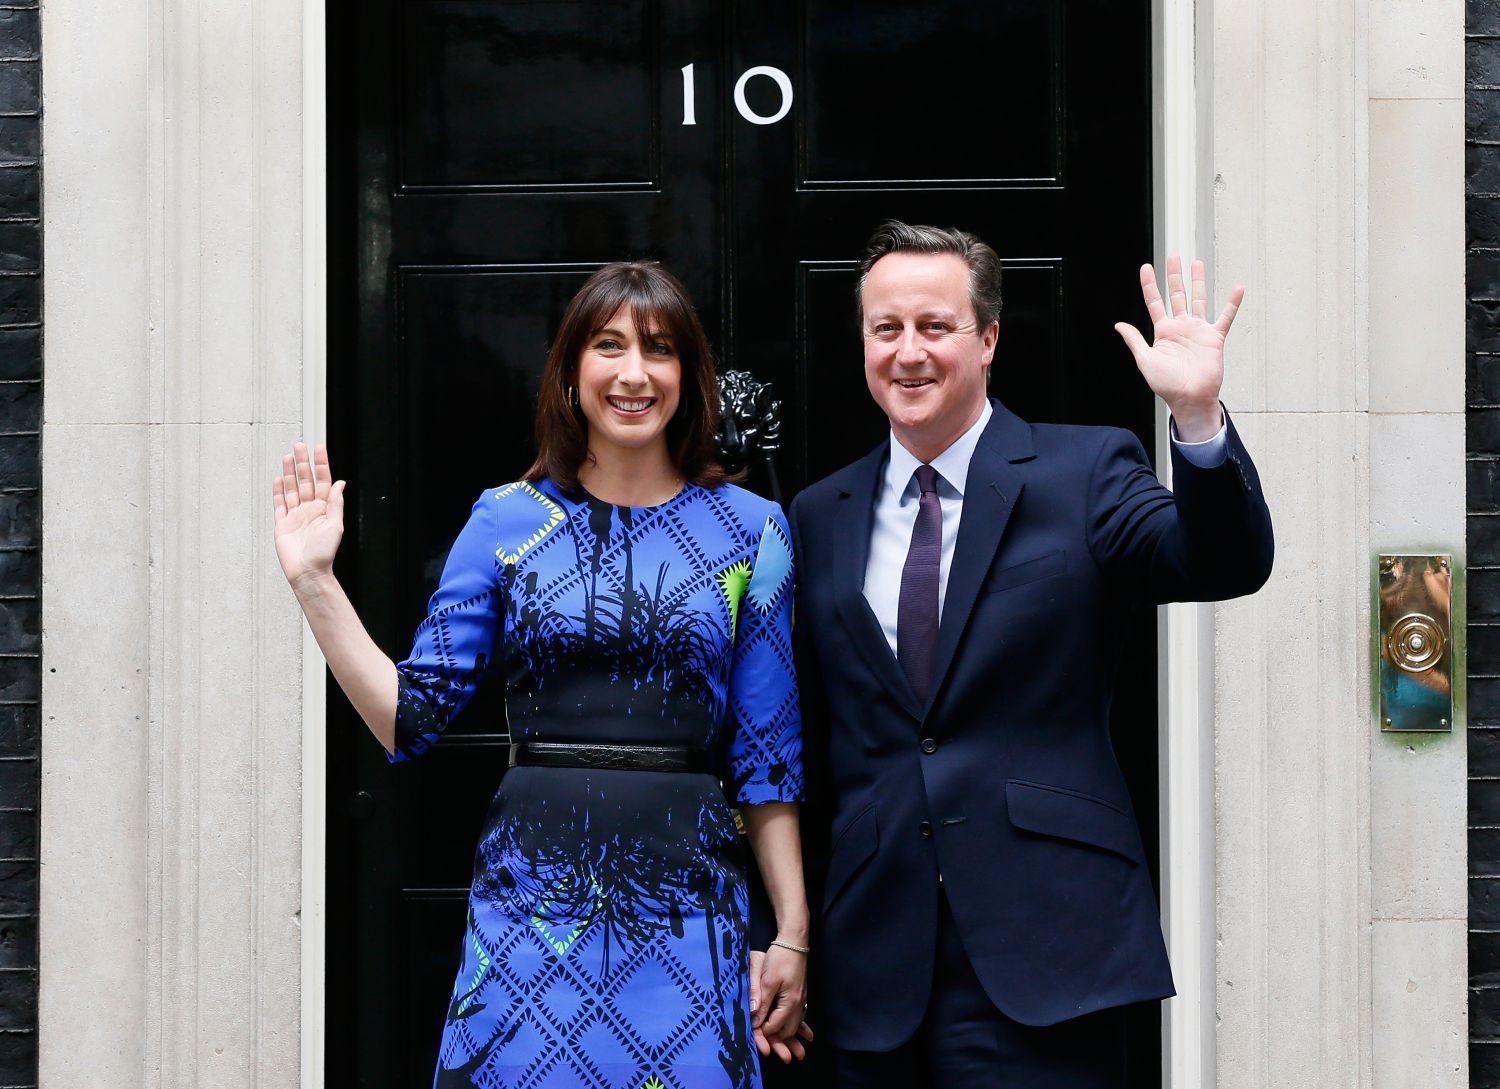 David Cameron és felesége a Downing Street 10-ben